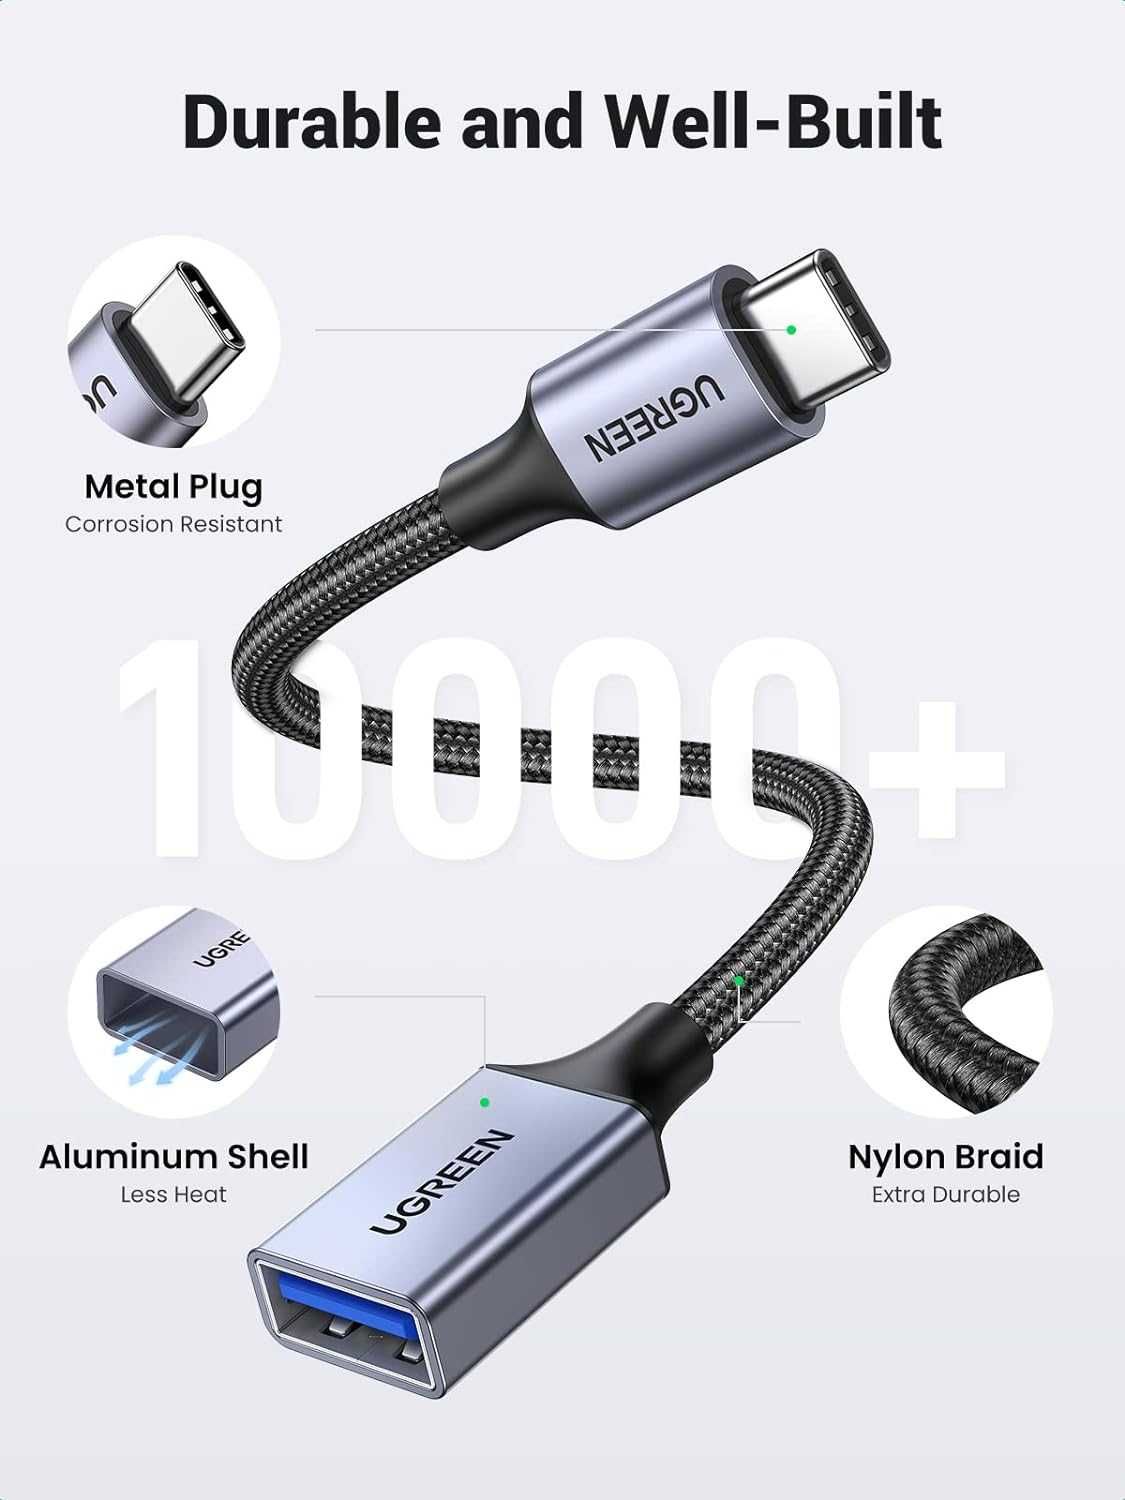 Ugreen USB 3.2 переходник адаптер с USB-A на USB-C